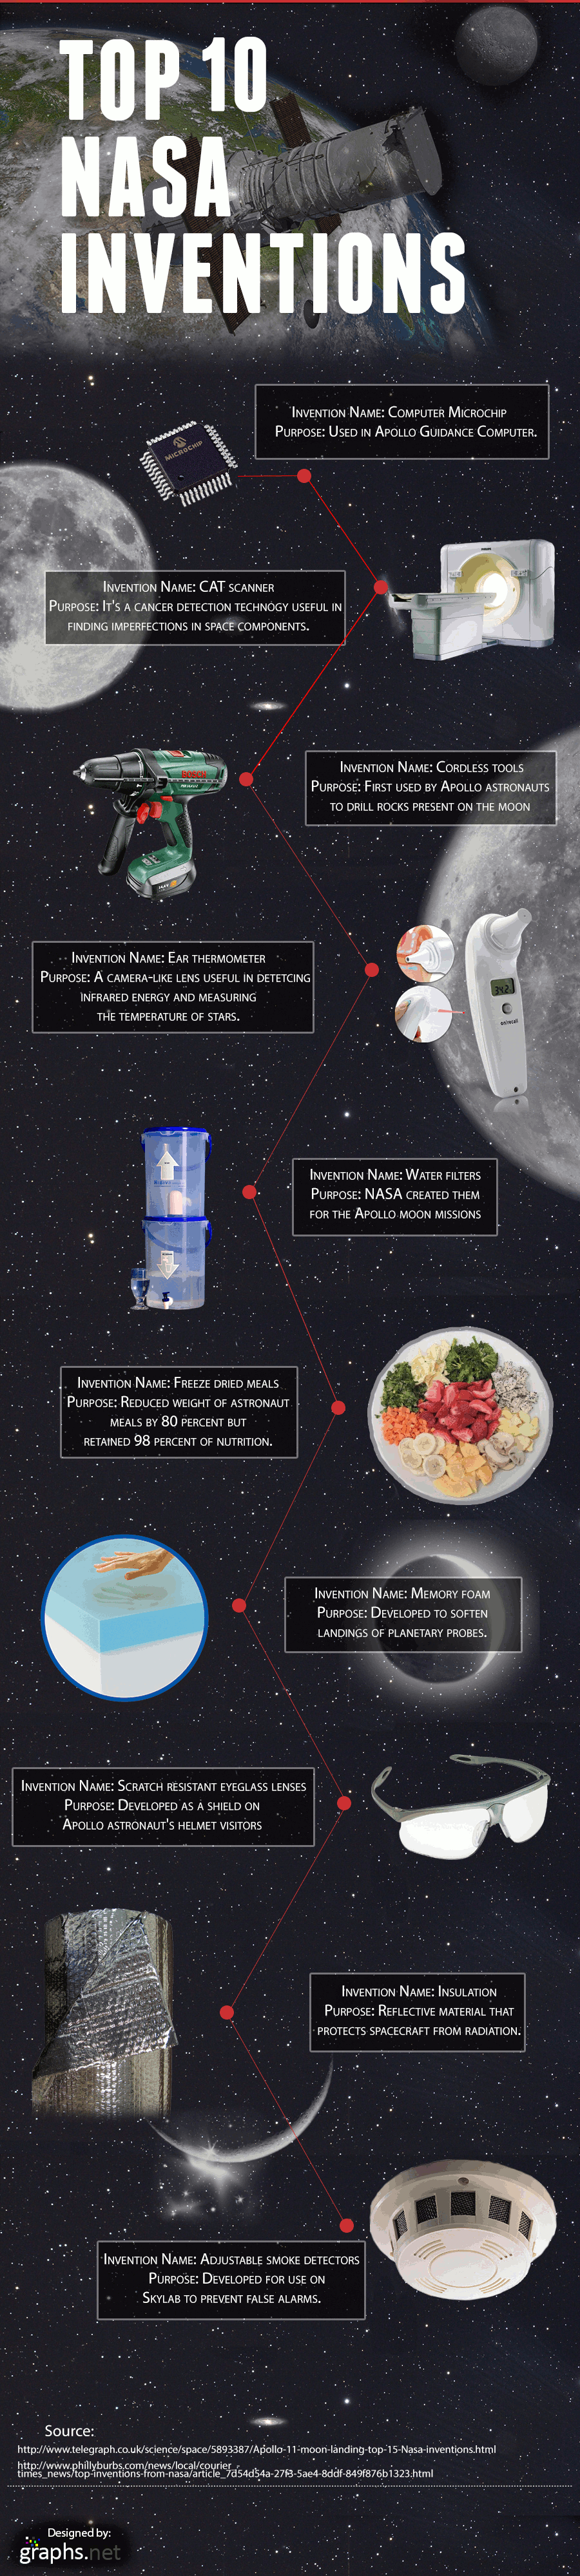 Top NASA Inventions